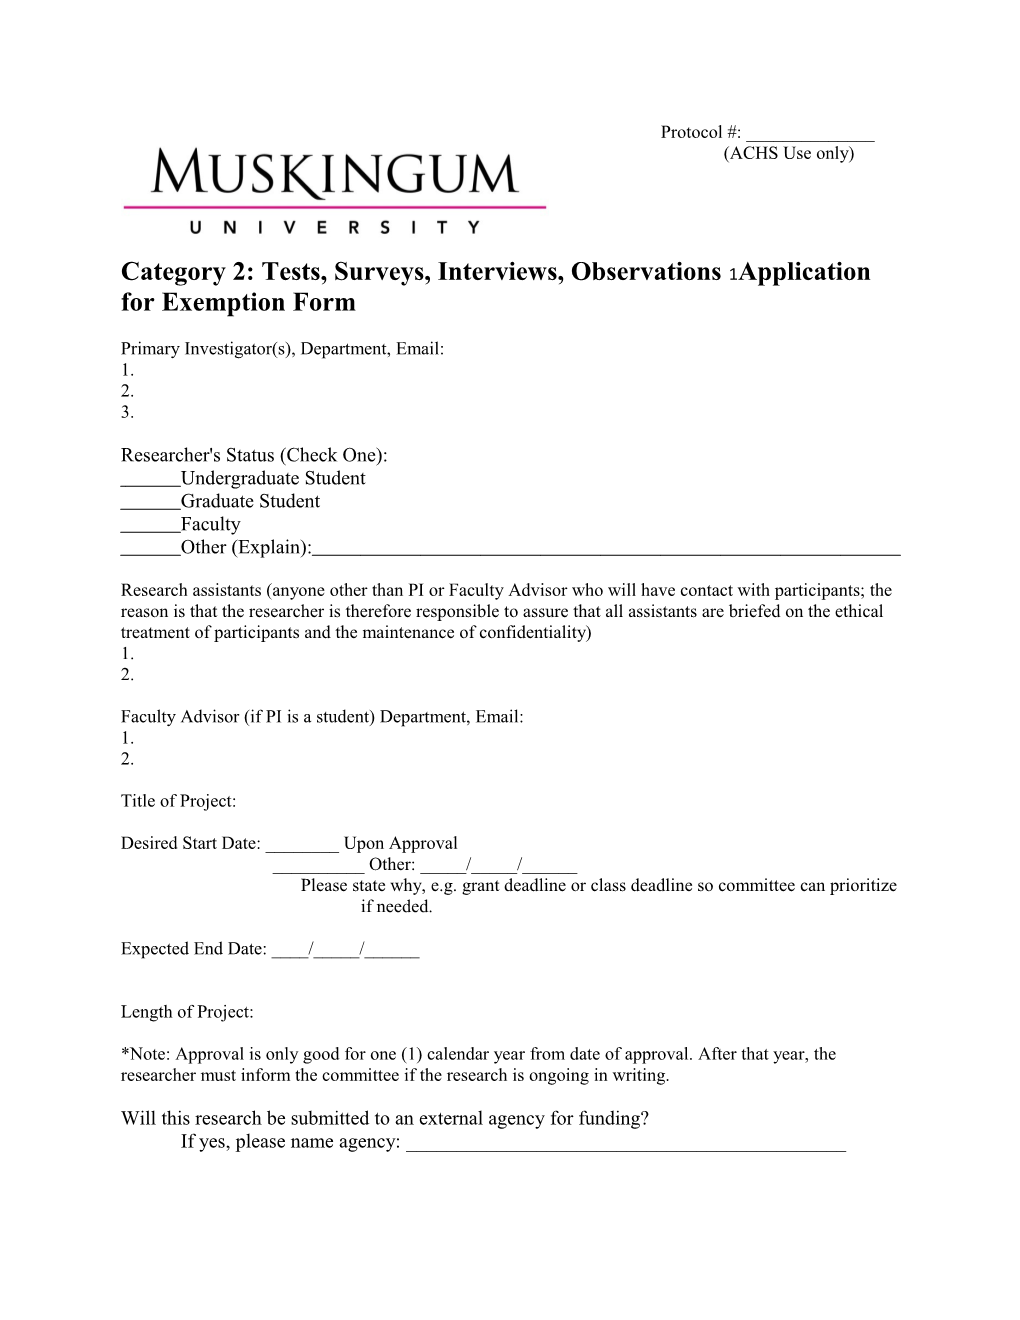 Category 2: Tests, Surveys, Interviews, Observationsapplication for Exemption Form